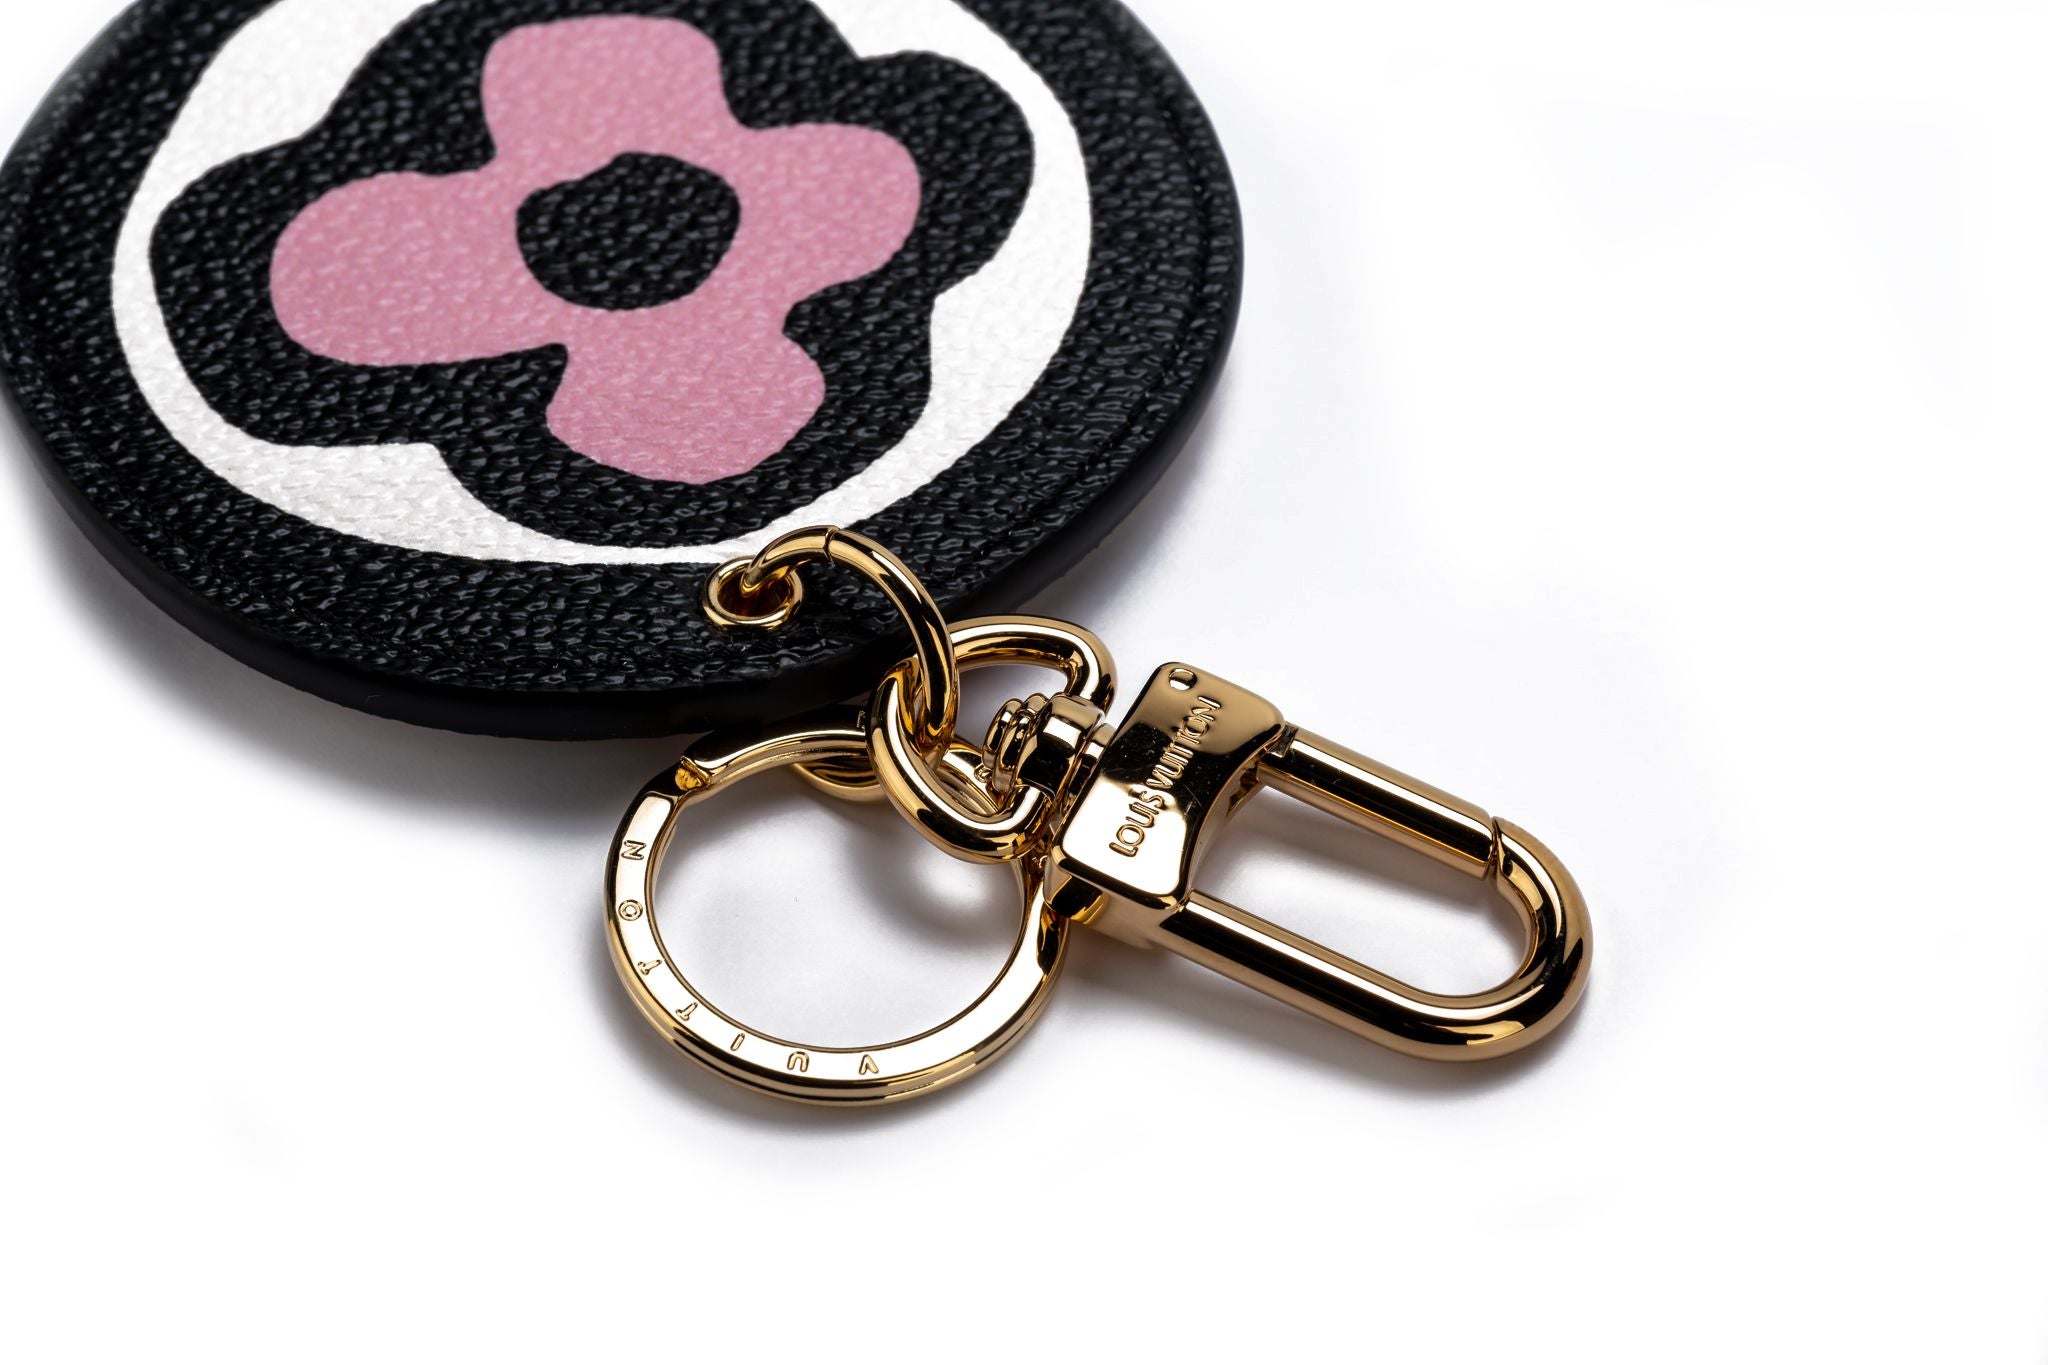 Louis Vuitton Pink Leopard Print Heart Shaped Key Chain / Bag